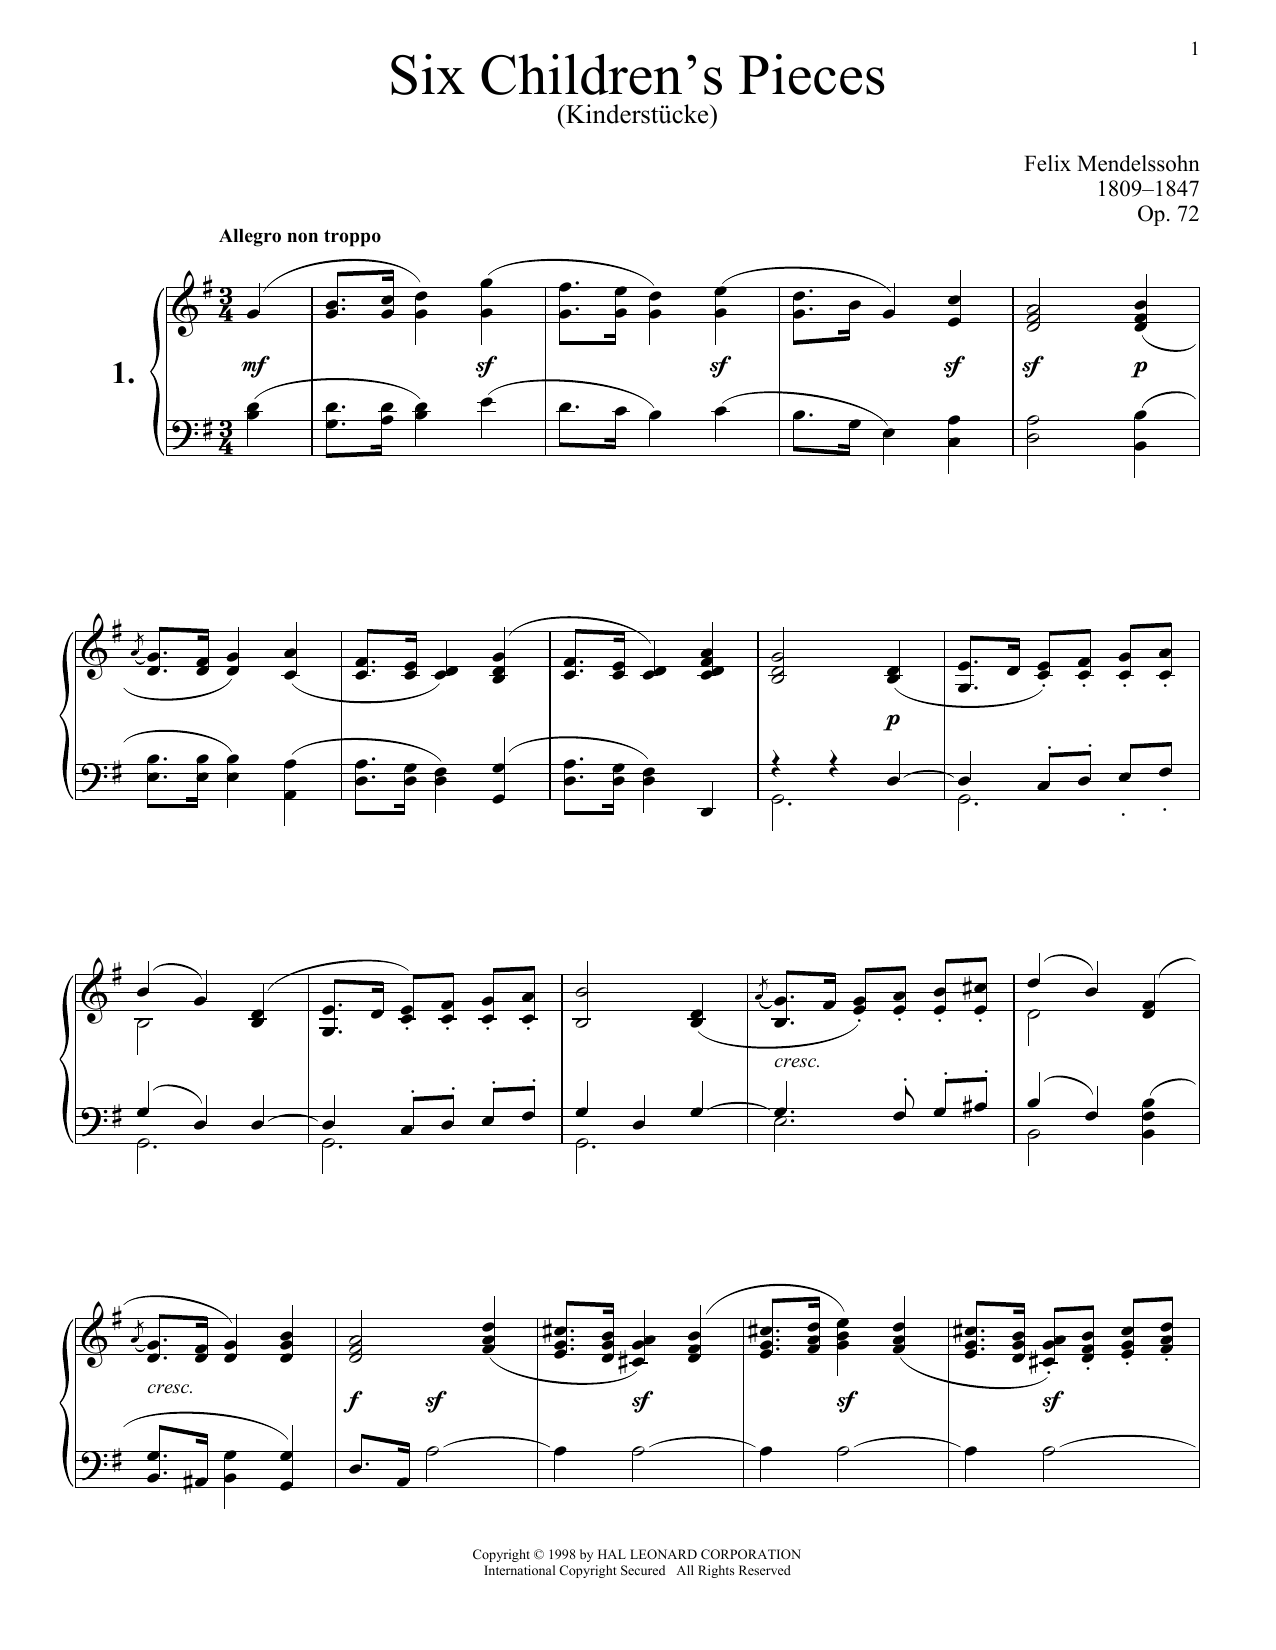 Felix Mendelssohn Six Children's Pieces (Kinderstucke), Op. 72 Sheet Music Notes & Chords for Piano - Download or Print PDF